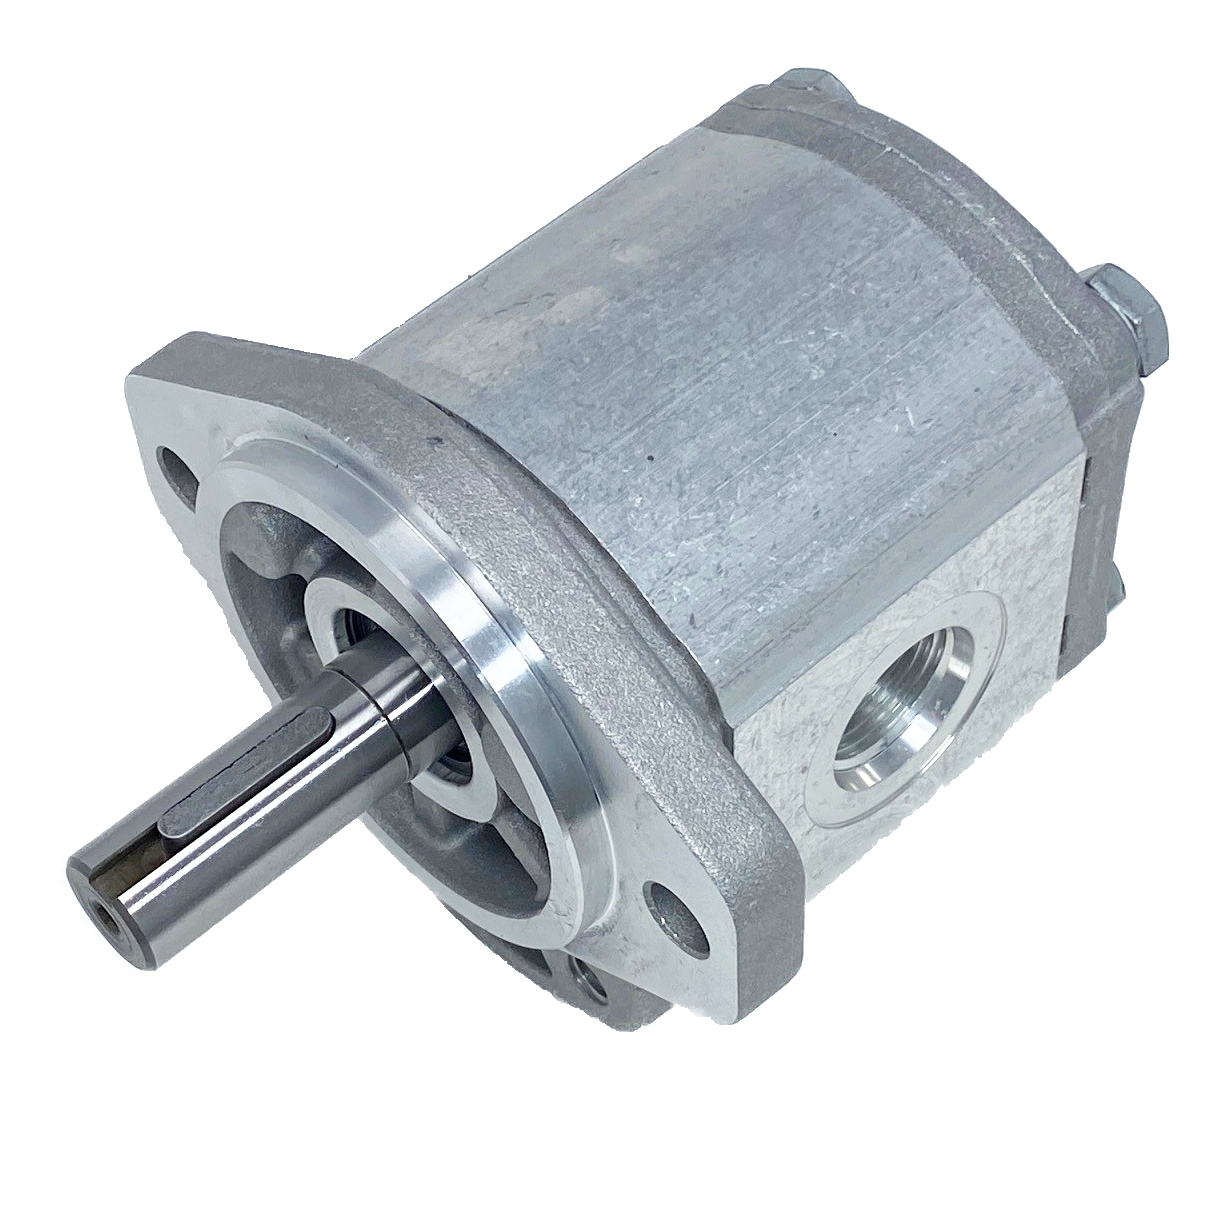 PLM20.20R0-49S1-LOC/OD-N-EL : Casappa Polaris Gear Motor, 21.14cc, 2900psi Rated, 3000RPM, Reversible Rear External Drain, 3/4" Bore x 3/16" Key Shaft, SAE A 2-Bolt Flange, 0.625 (5/8") #10 SAE Inlet, 0.75 (3/4") #12 SAE Outlet, Aluminum Body & Flange